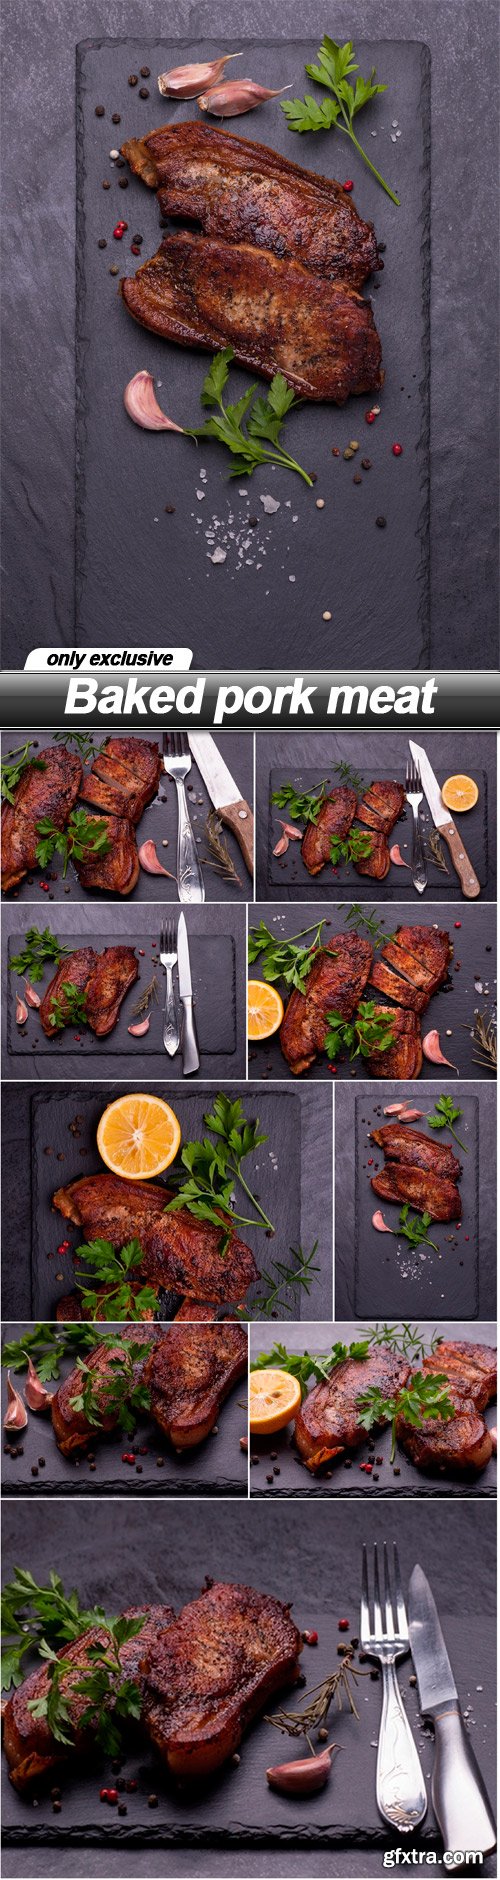 Baked pork meat - 9 UHQ JPEG